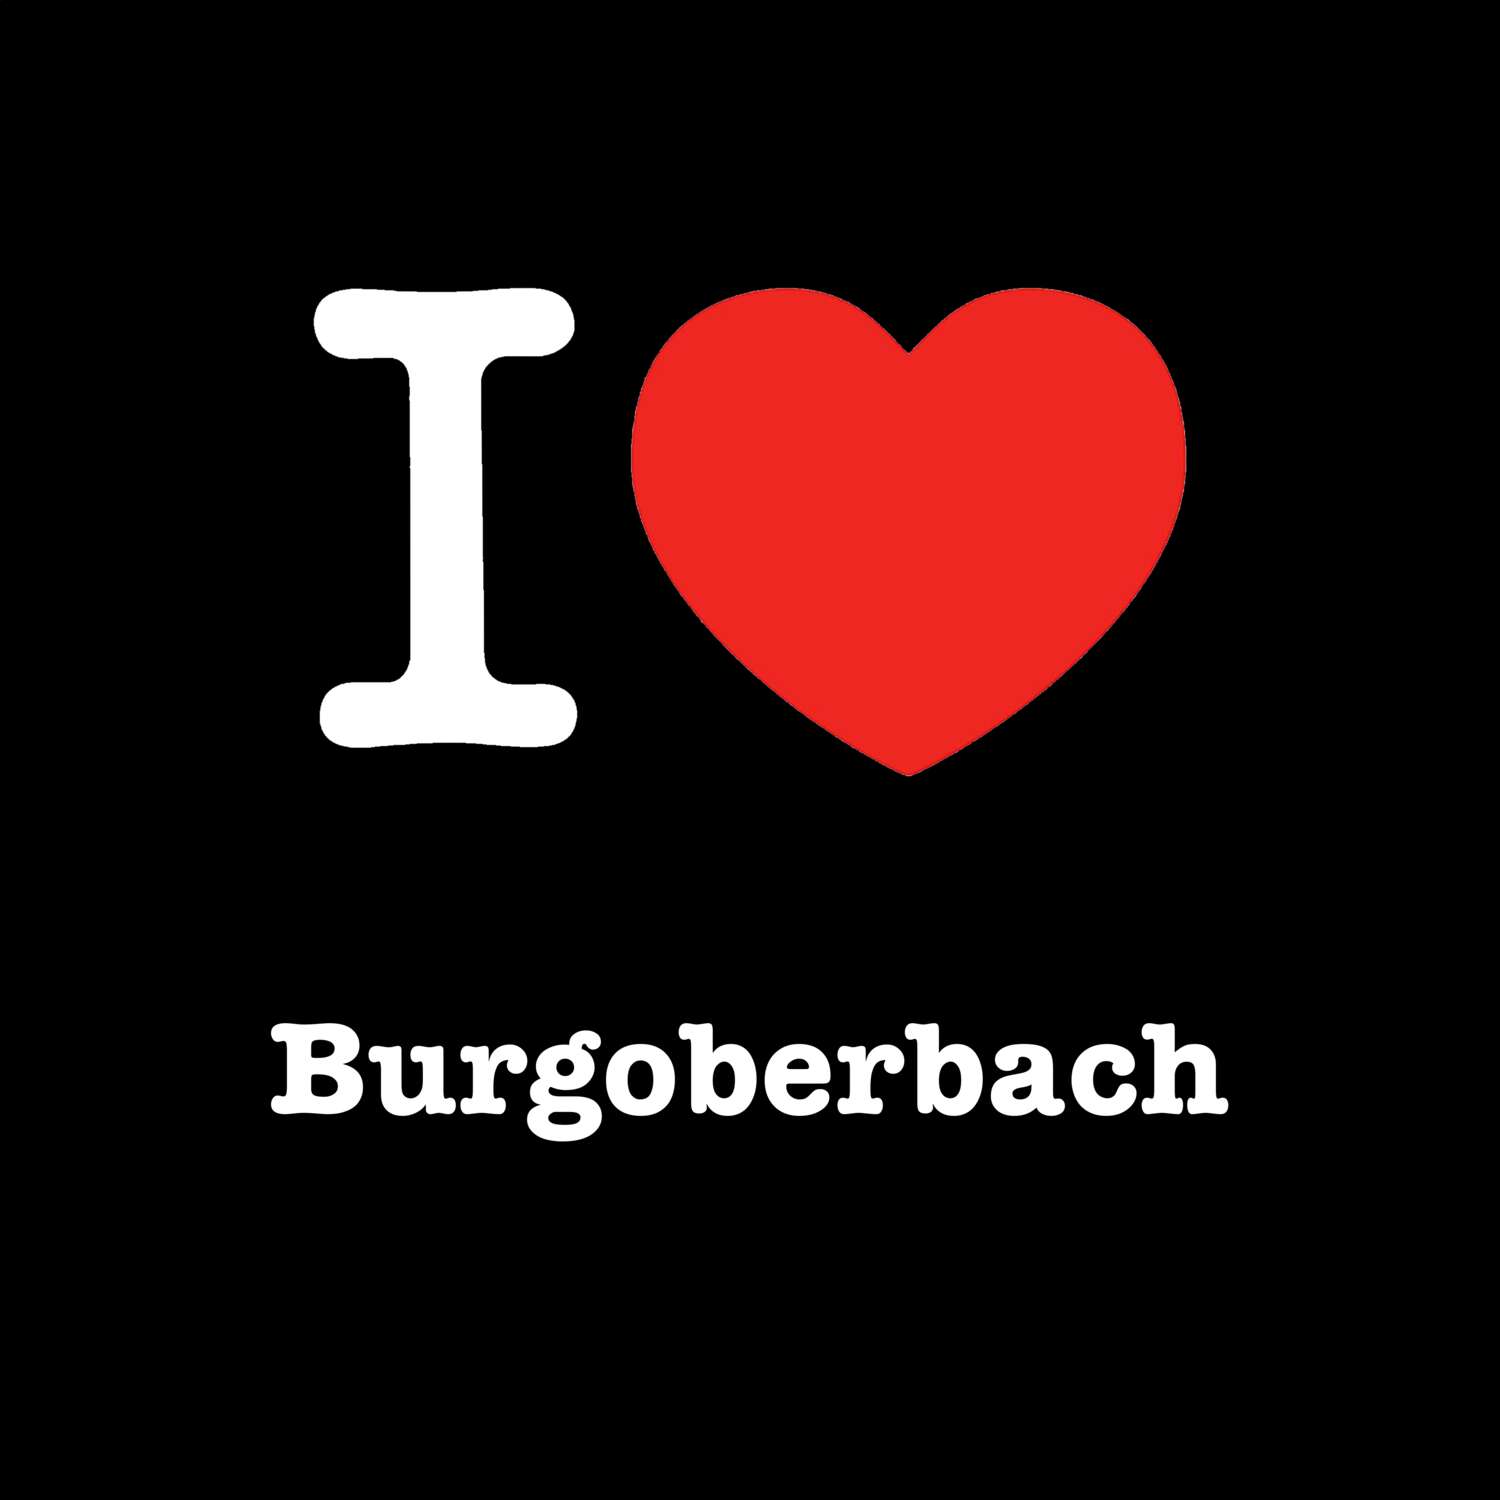 Burgoberbach T-Shirt »I love«